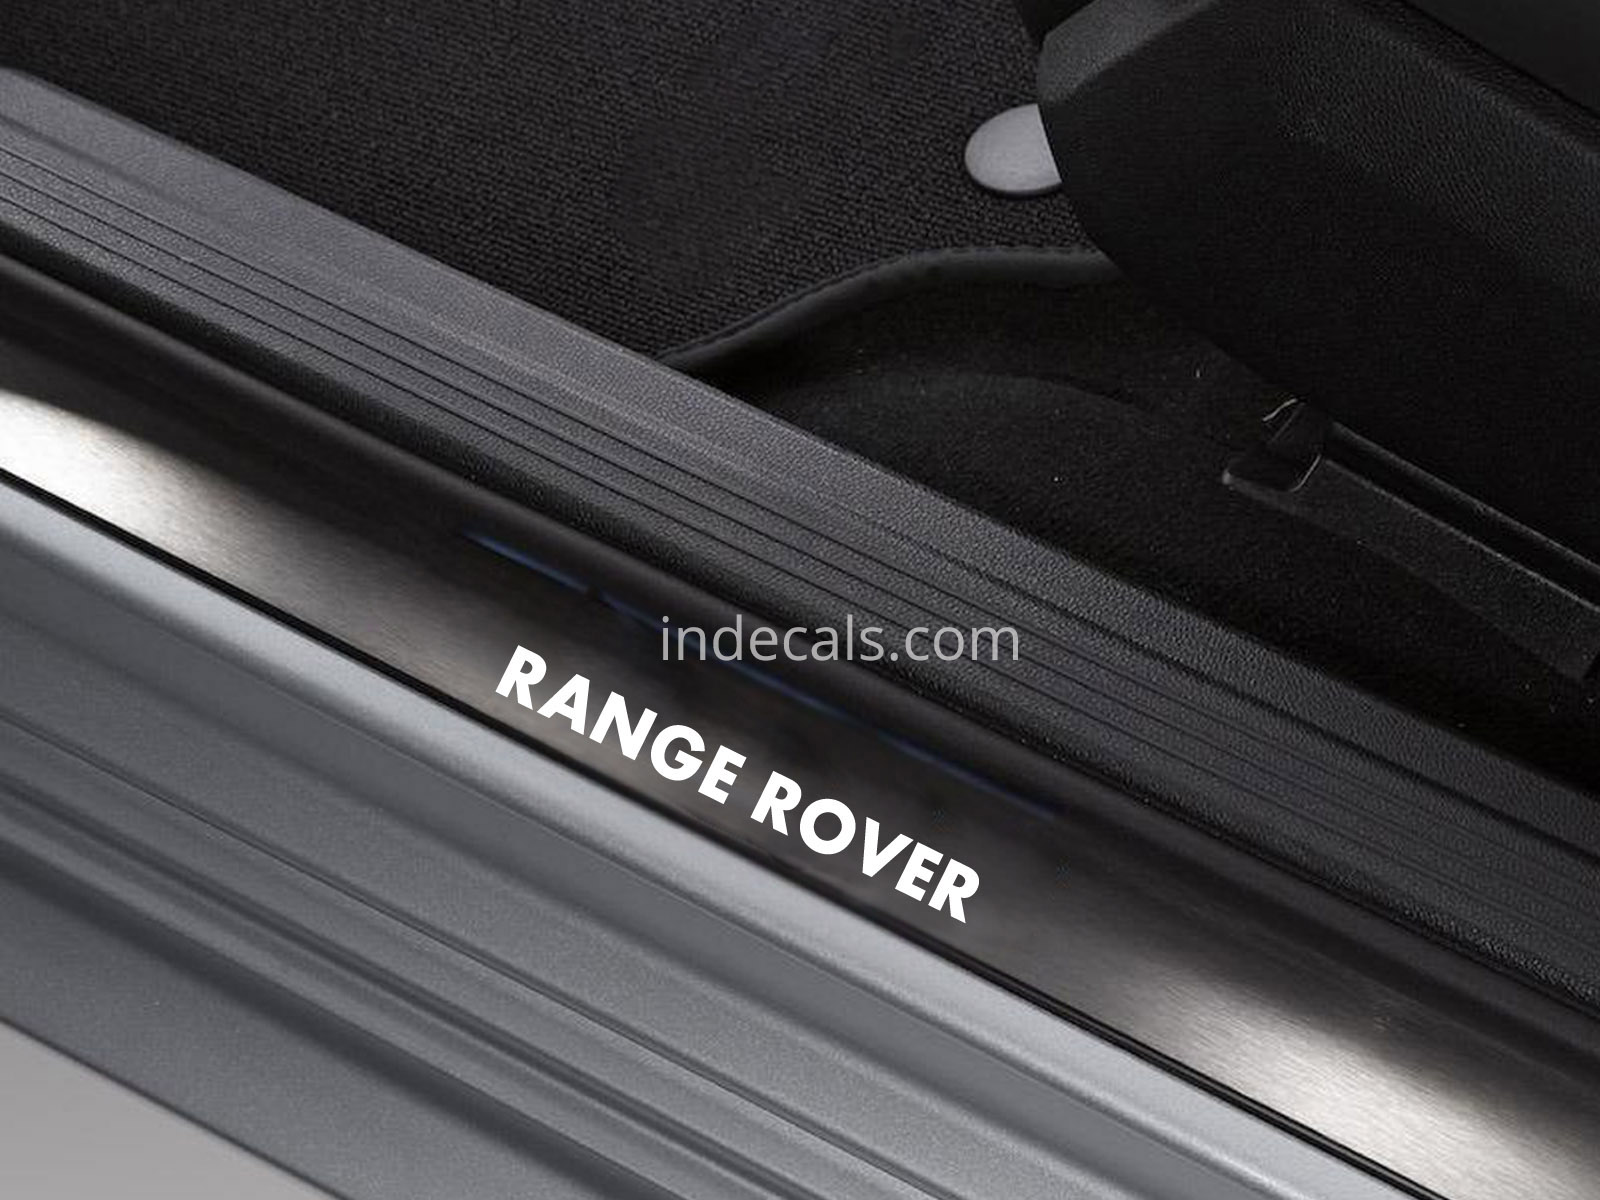 6 x Range Rover Stickers for Door Sills - White